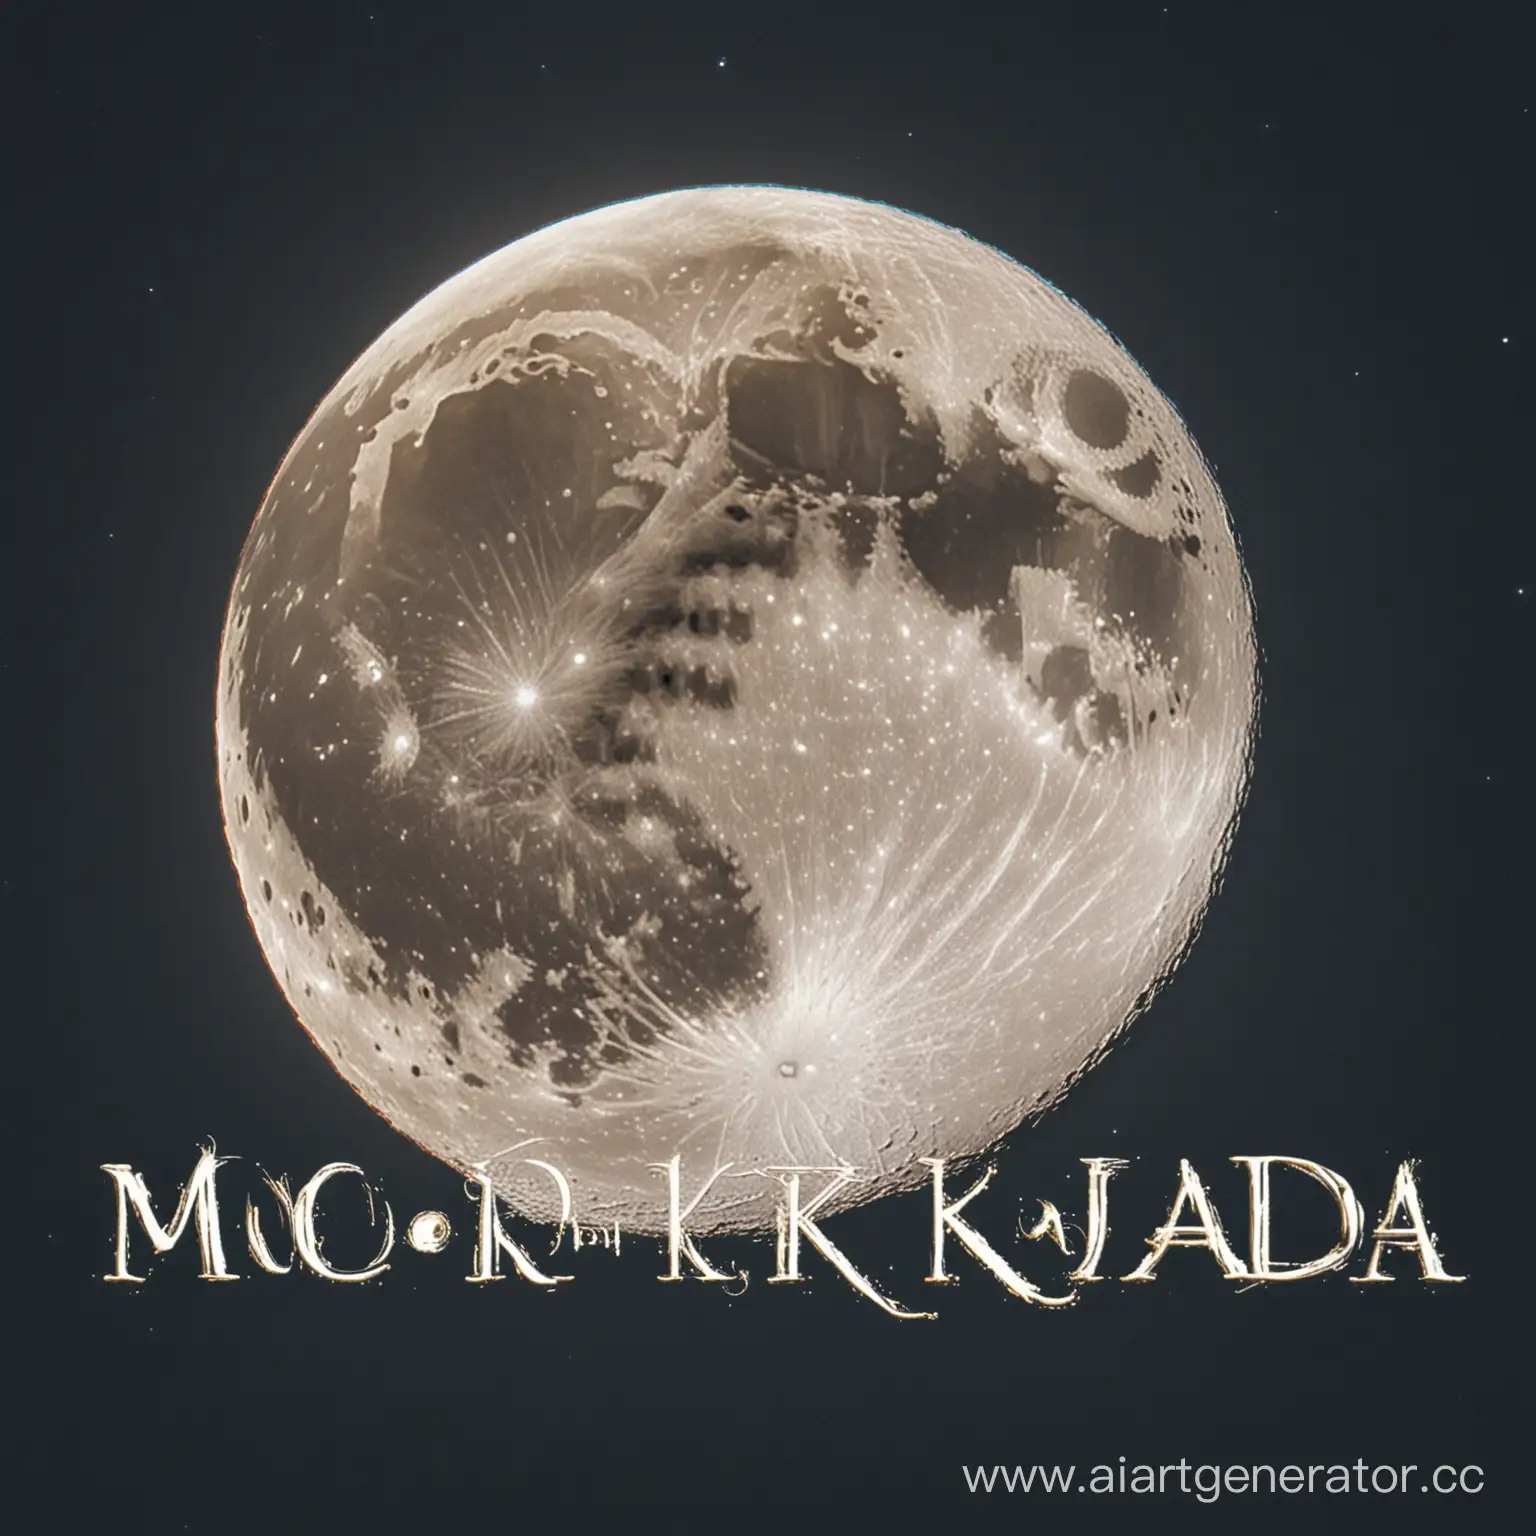 Serene-Moonlit-Landscape-with-MOONKADA-Inscription